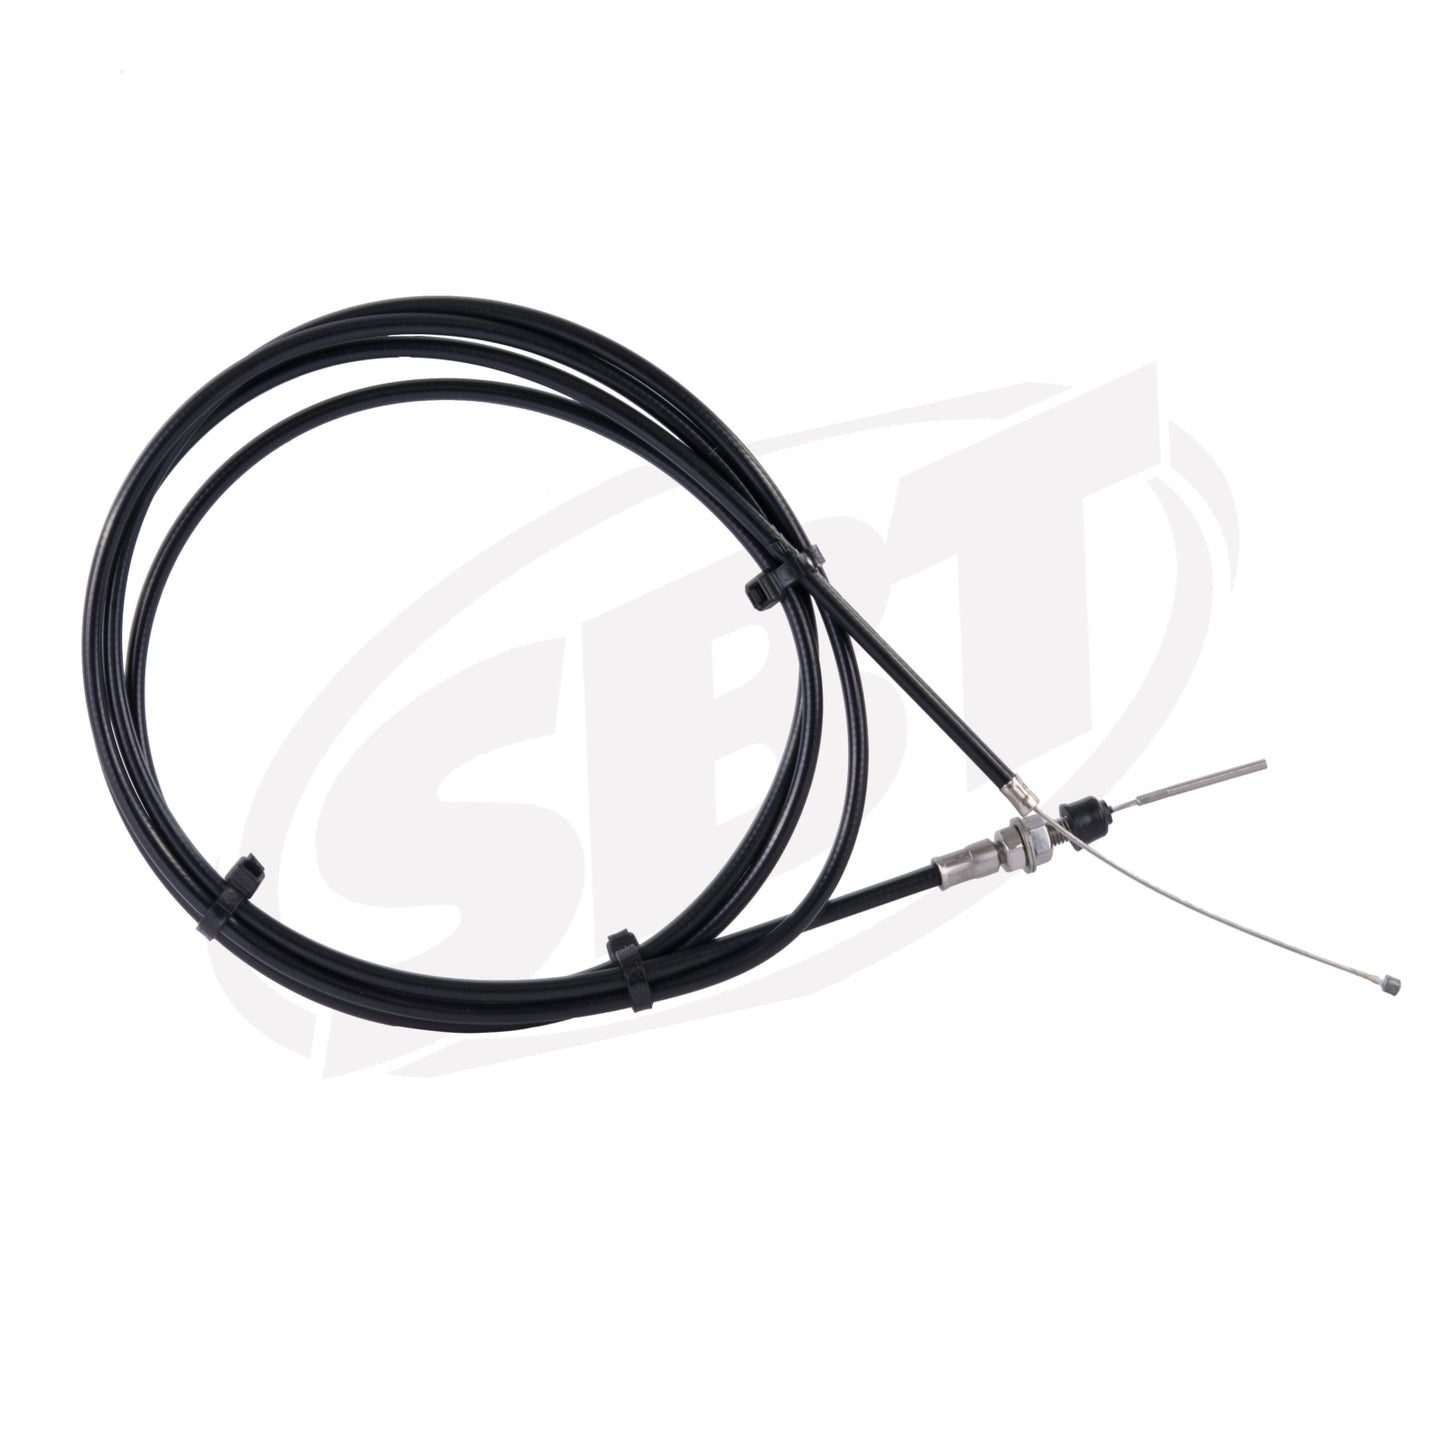 SBT Polaris Choke Cable SLT 780 7080669 1997 ( PRE ORDER )